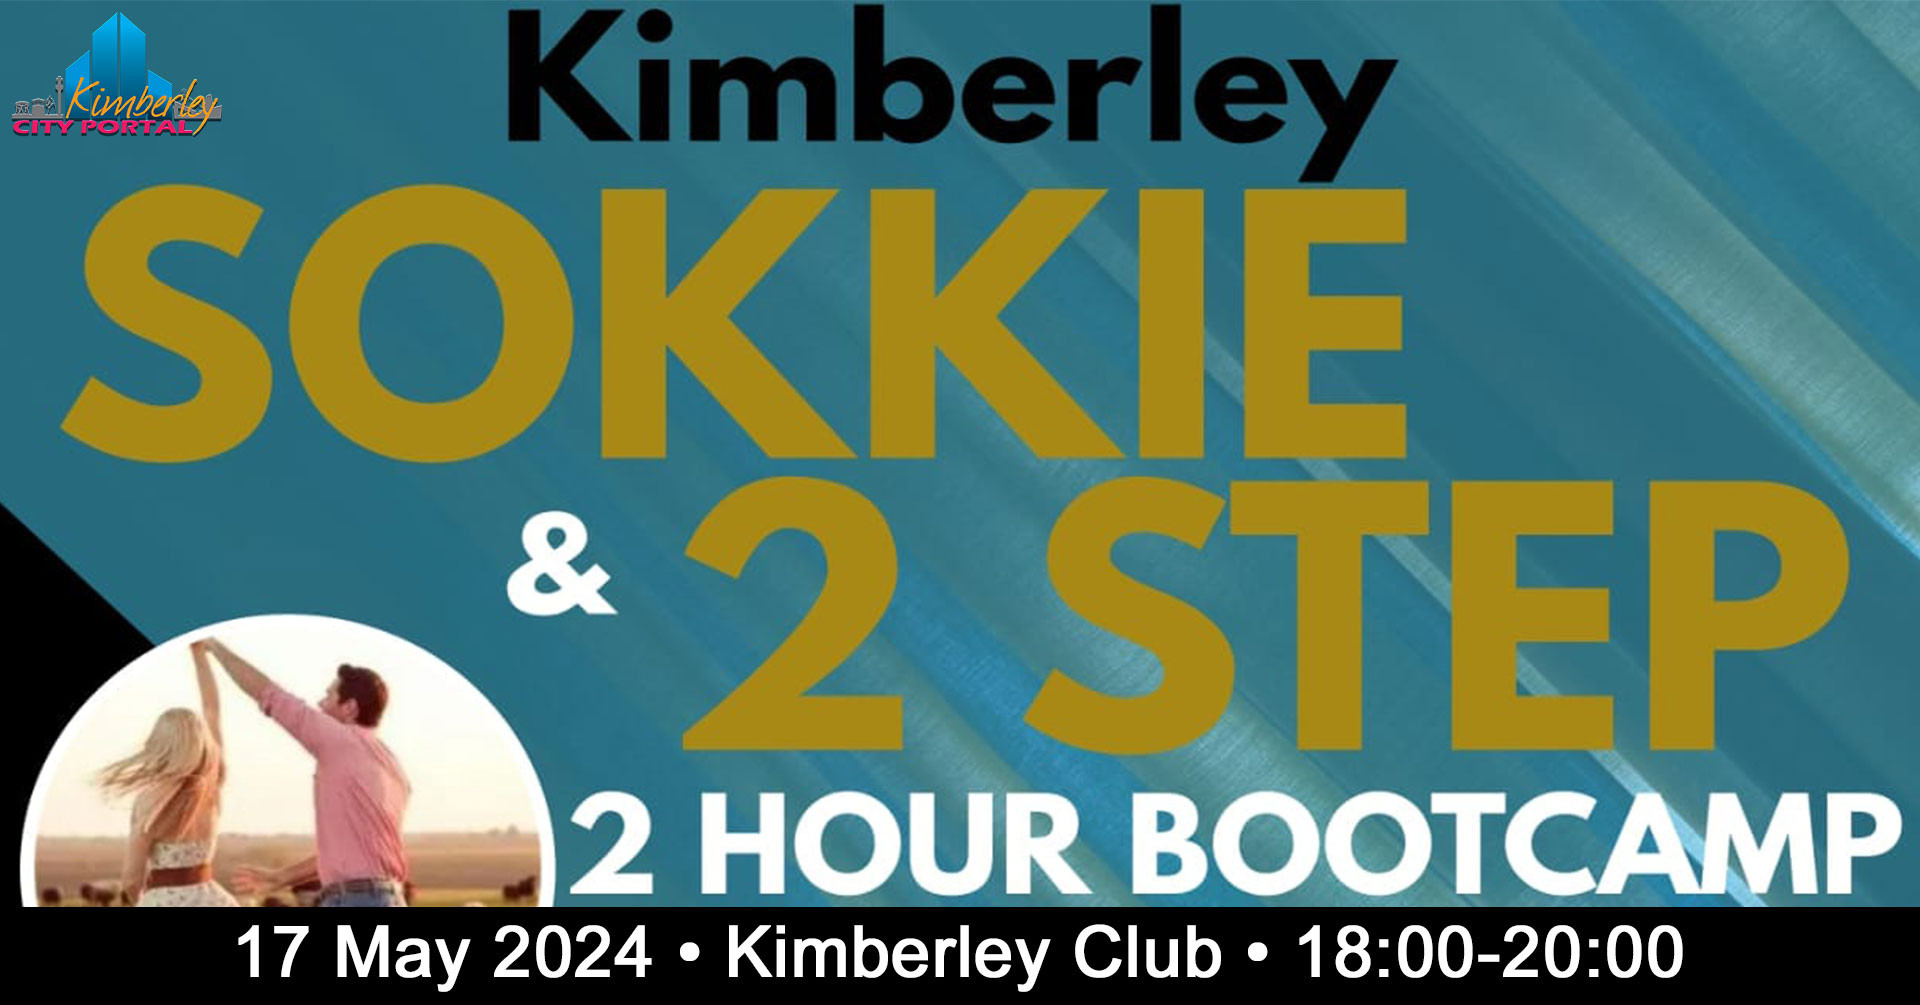 Sokkie & 2 Step 2 Hour Bootcamp @ Kimberley Club